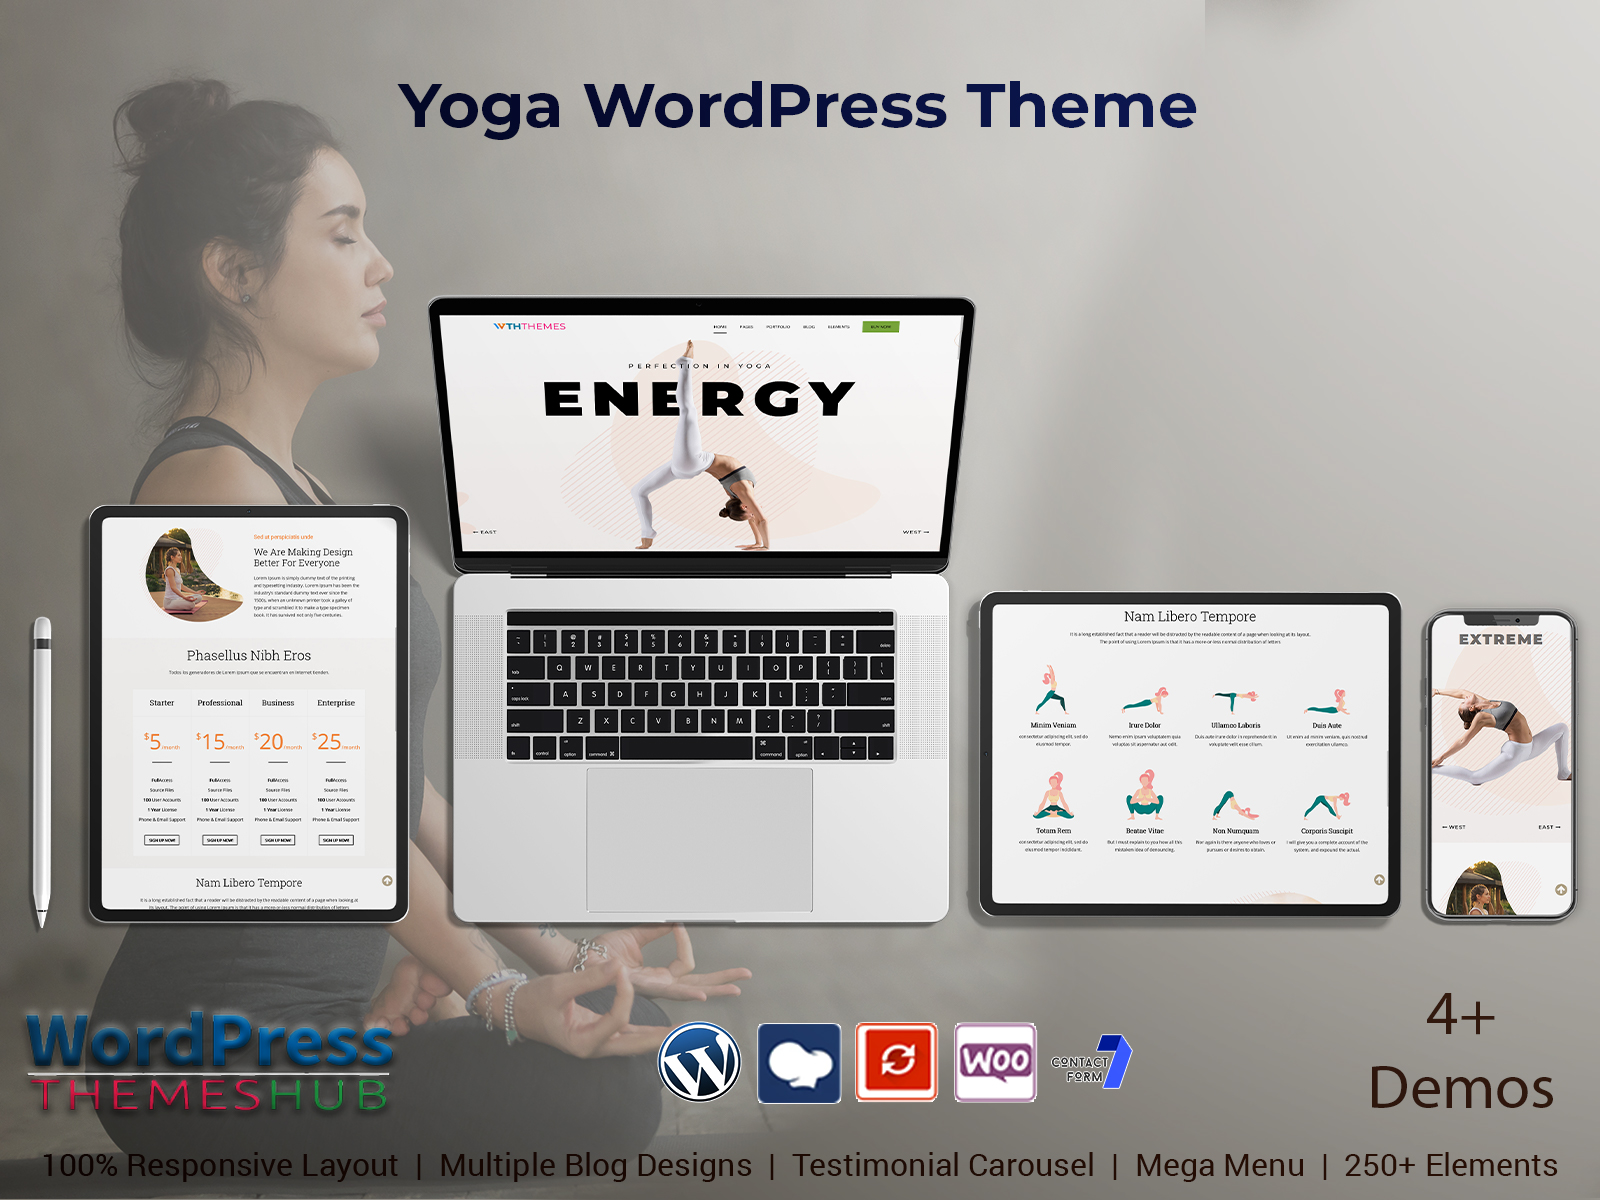 Yoga WordPress Theme Built For Yoga, Fitness, And Health-focused Website